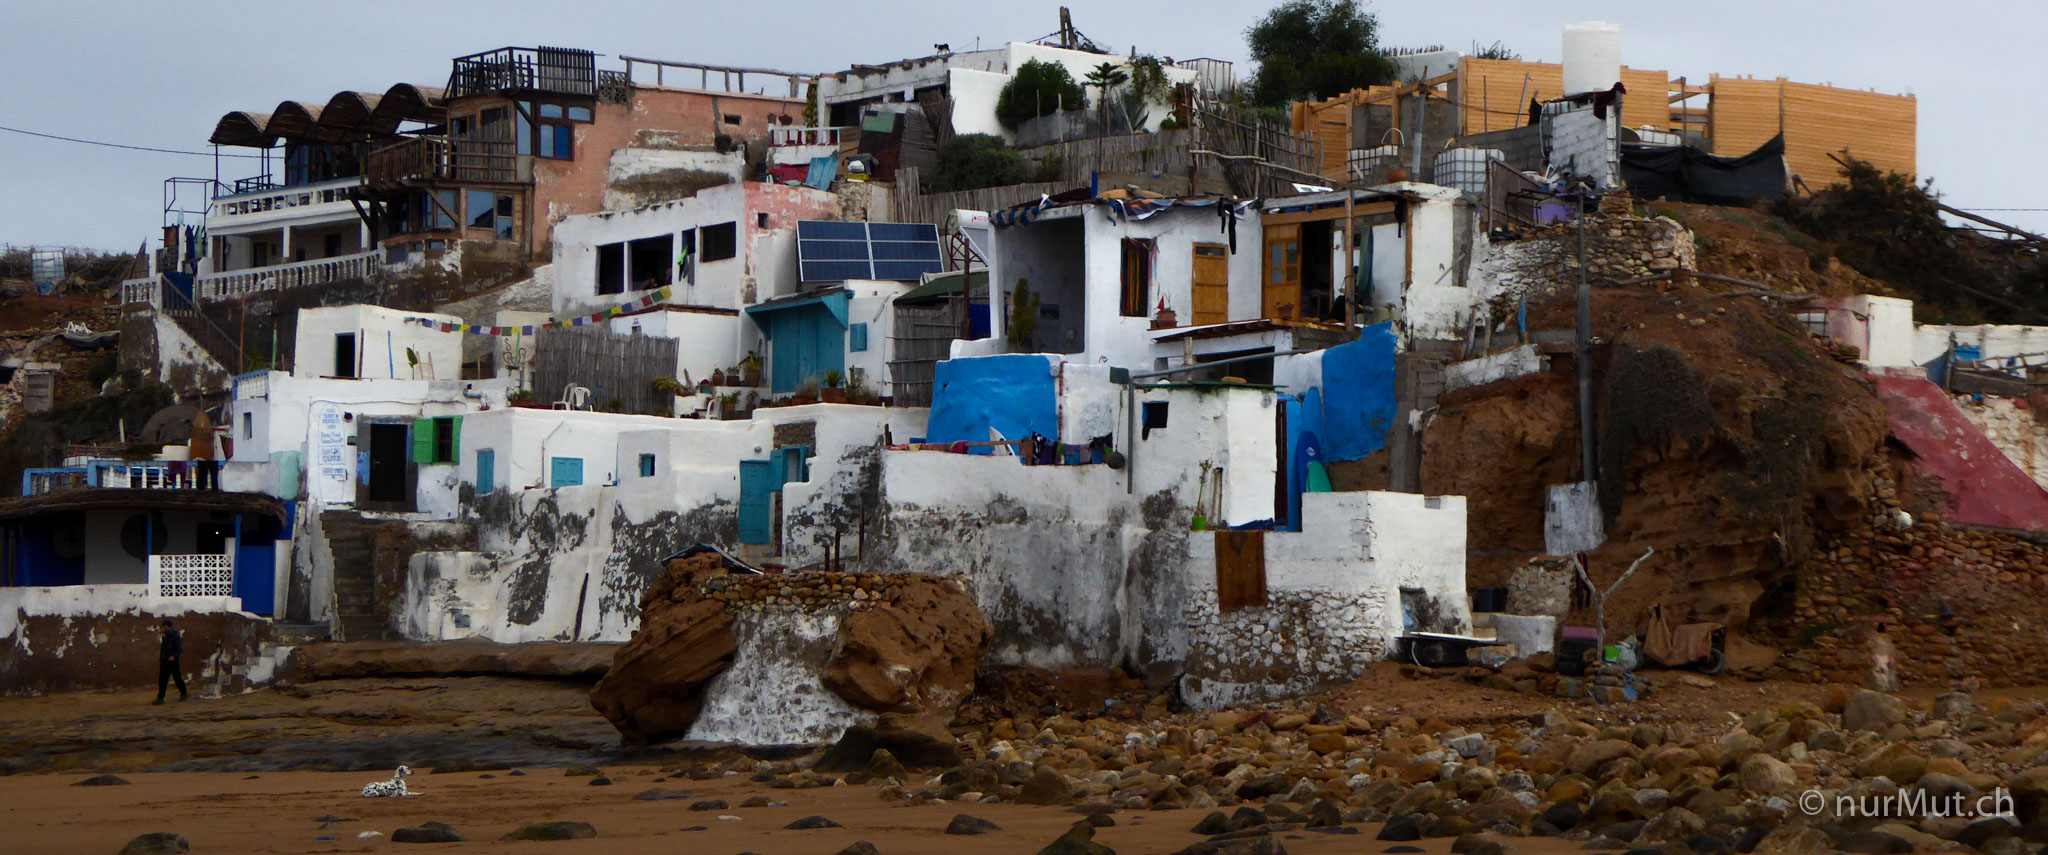 marokkanische Berber-marokko-imsouane-morbide strandsiedlung